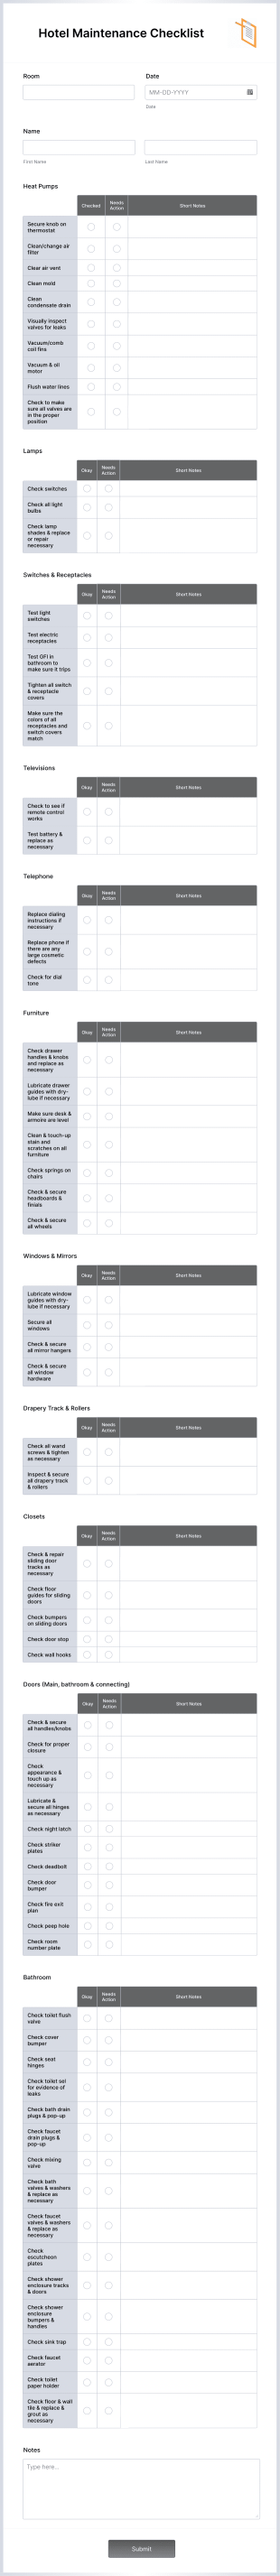 Hotel Maintenance Checklist Form Template